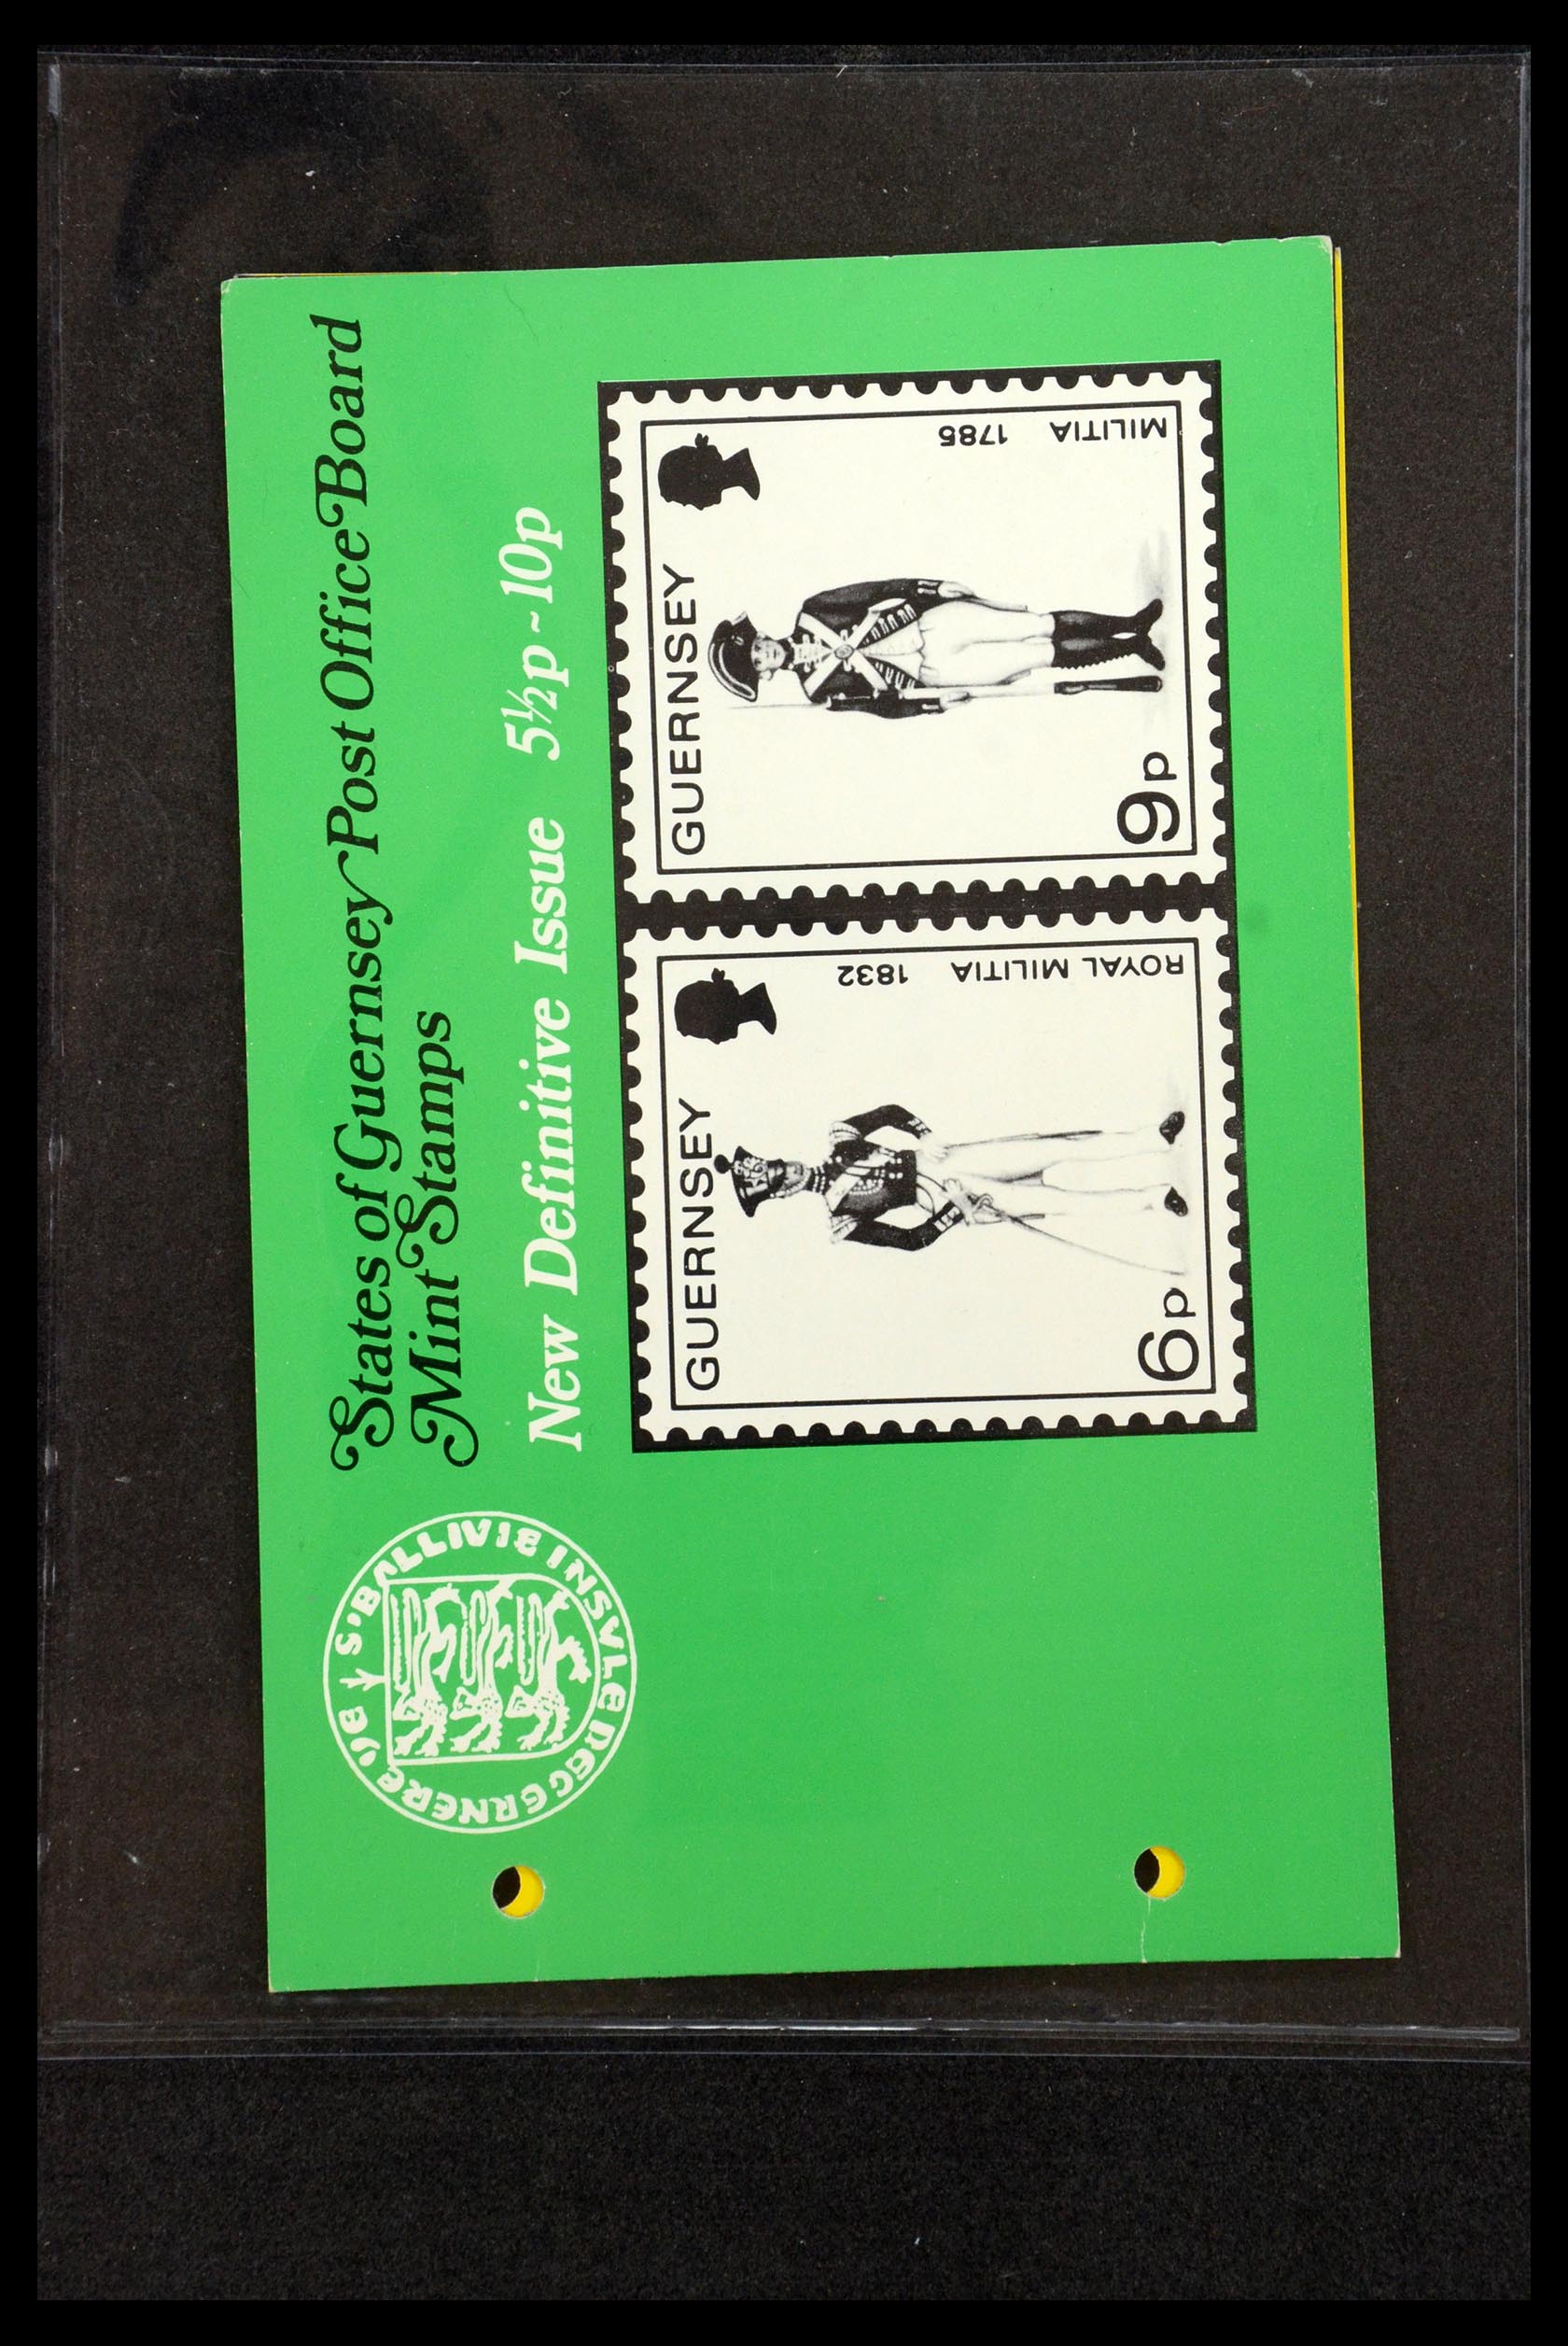 35976 024 - Stamp collection 35976 Guernsey and Alderney stamp booklets 1969-2015!